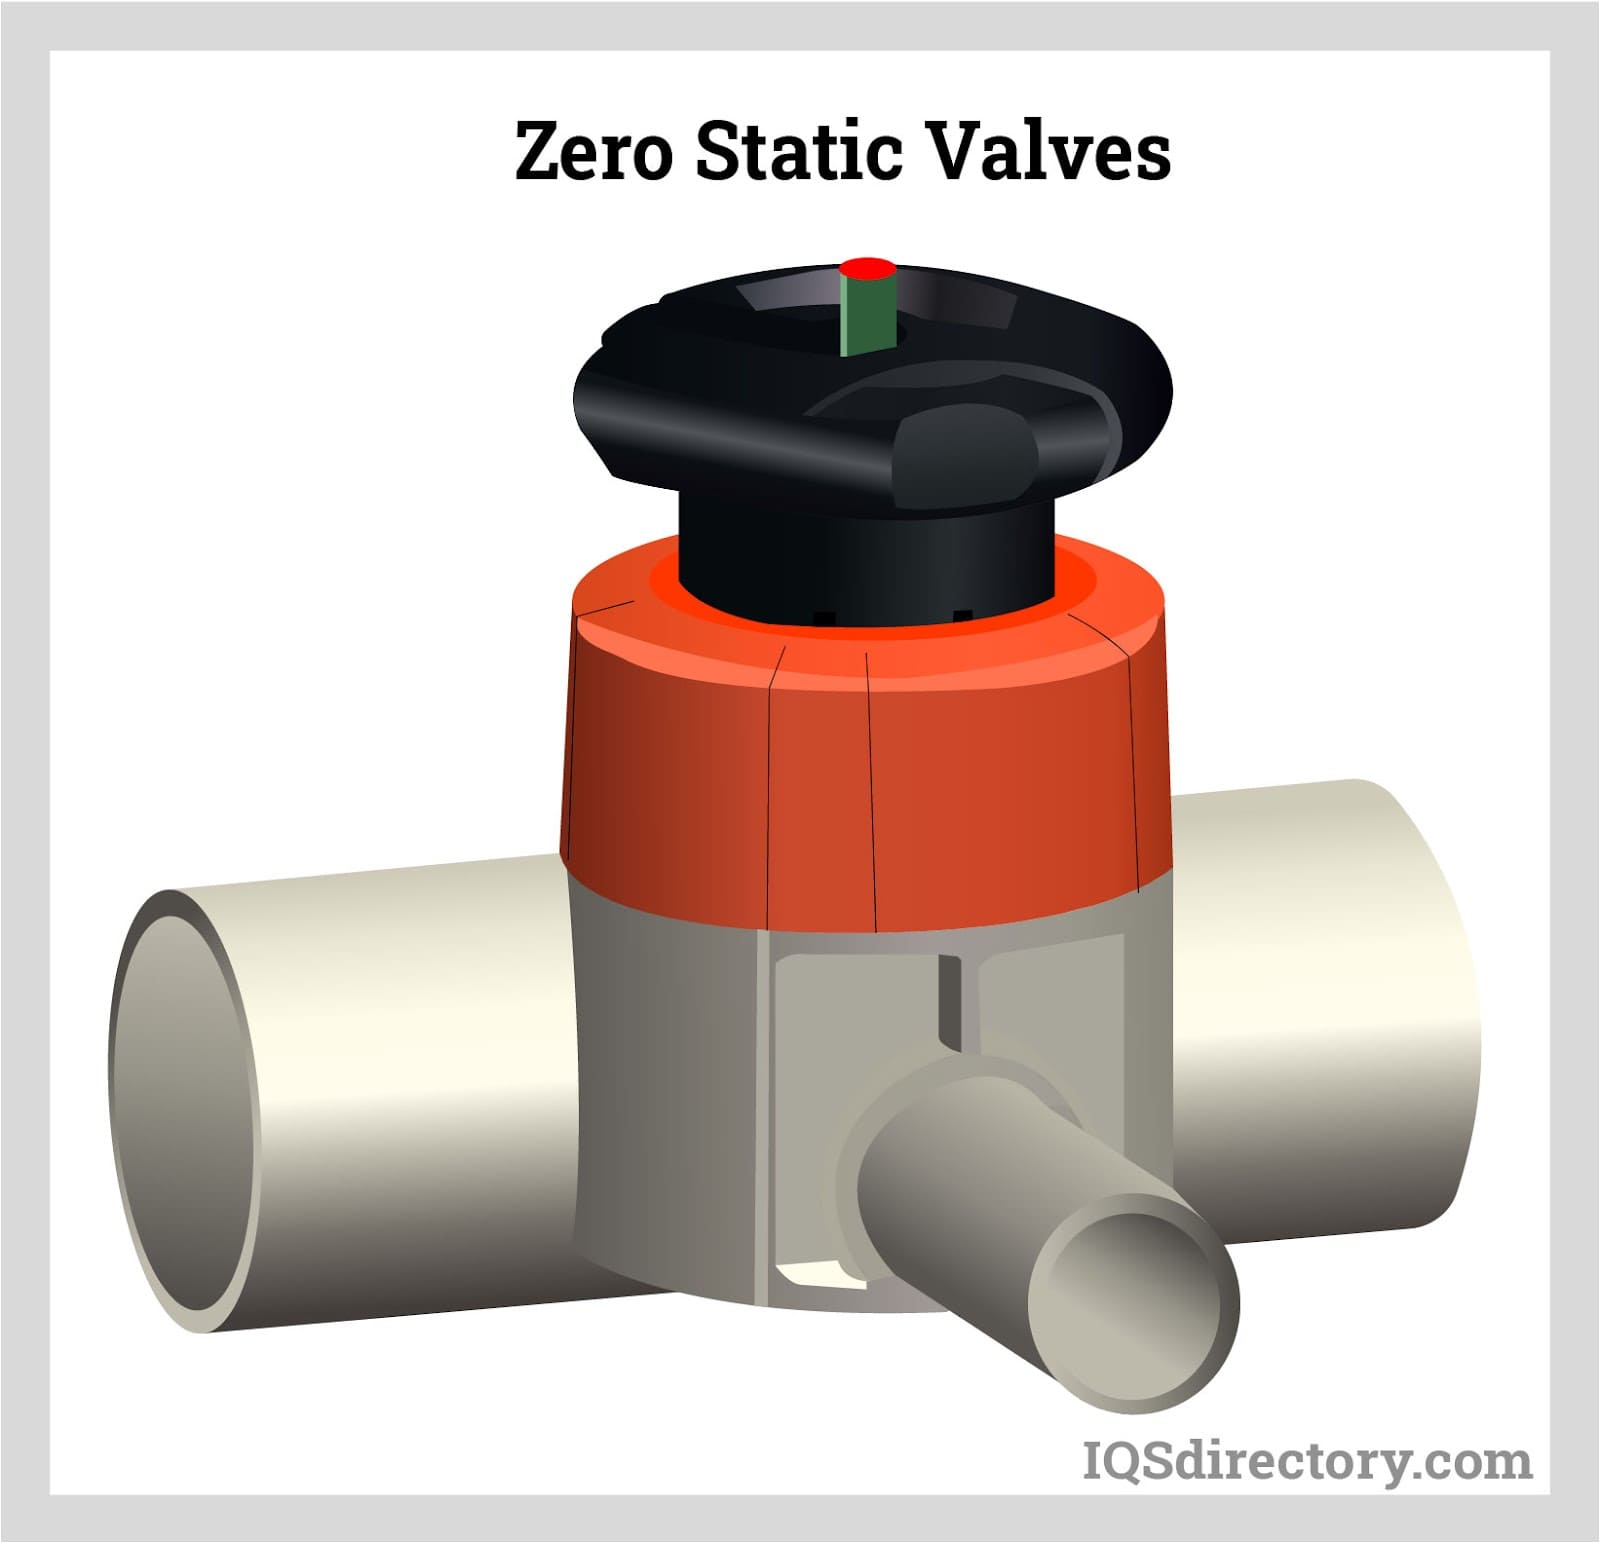 Zero Static Valves